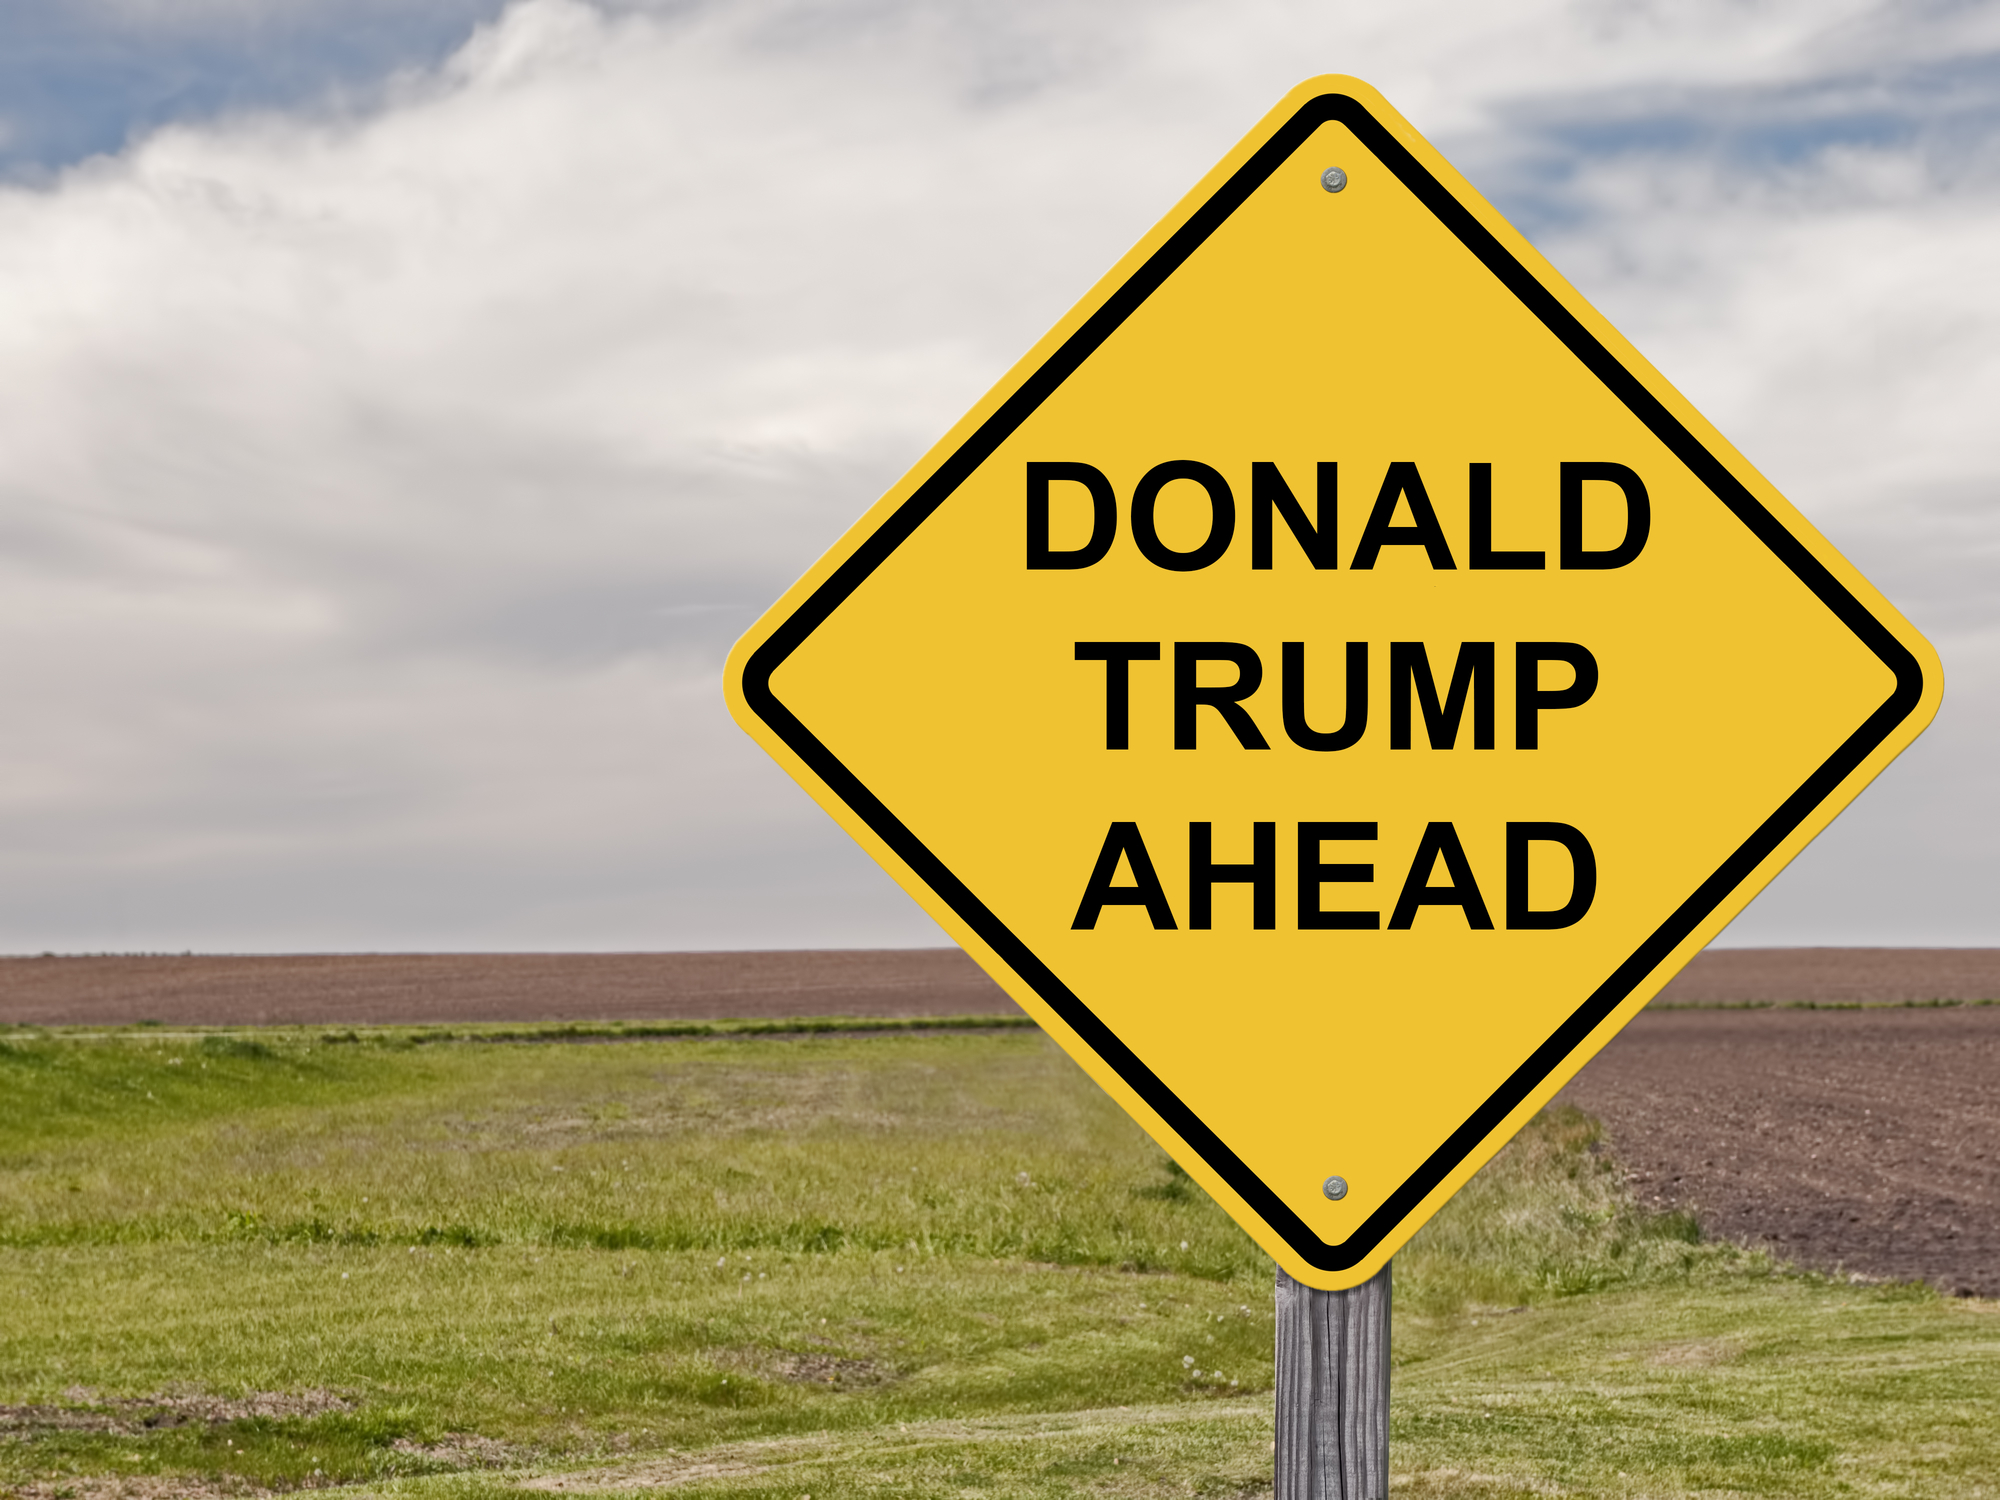 Caution – Donald Trump Ahead